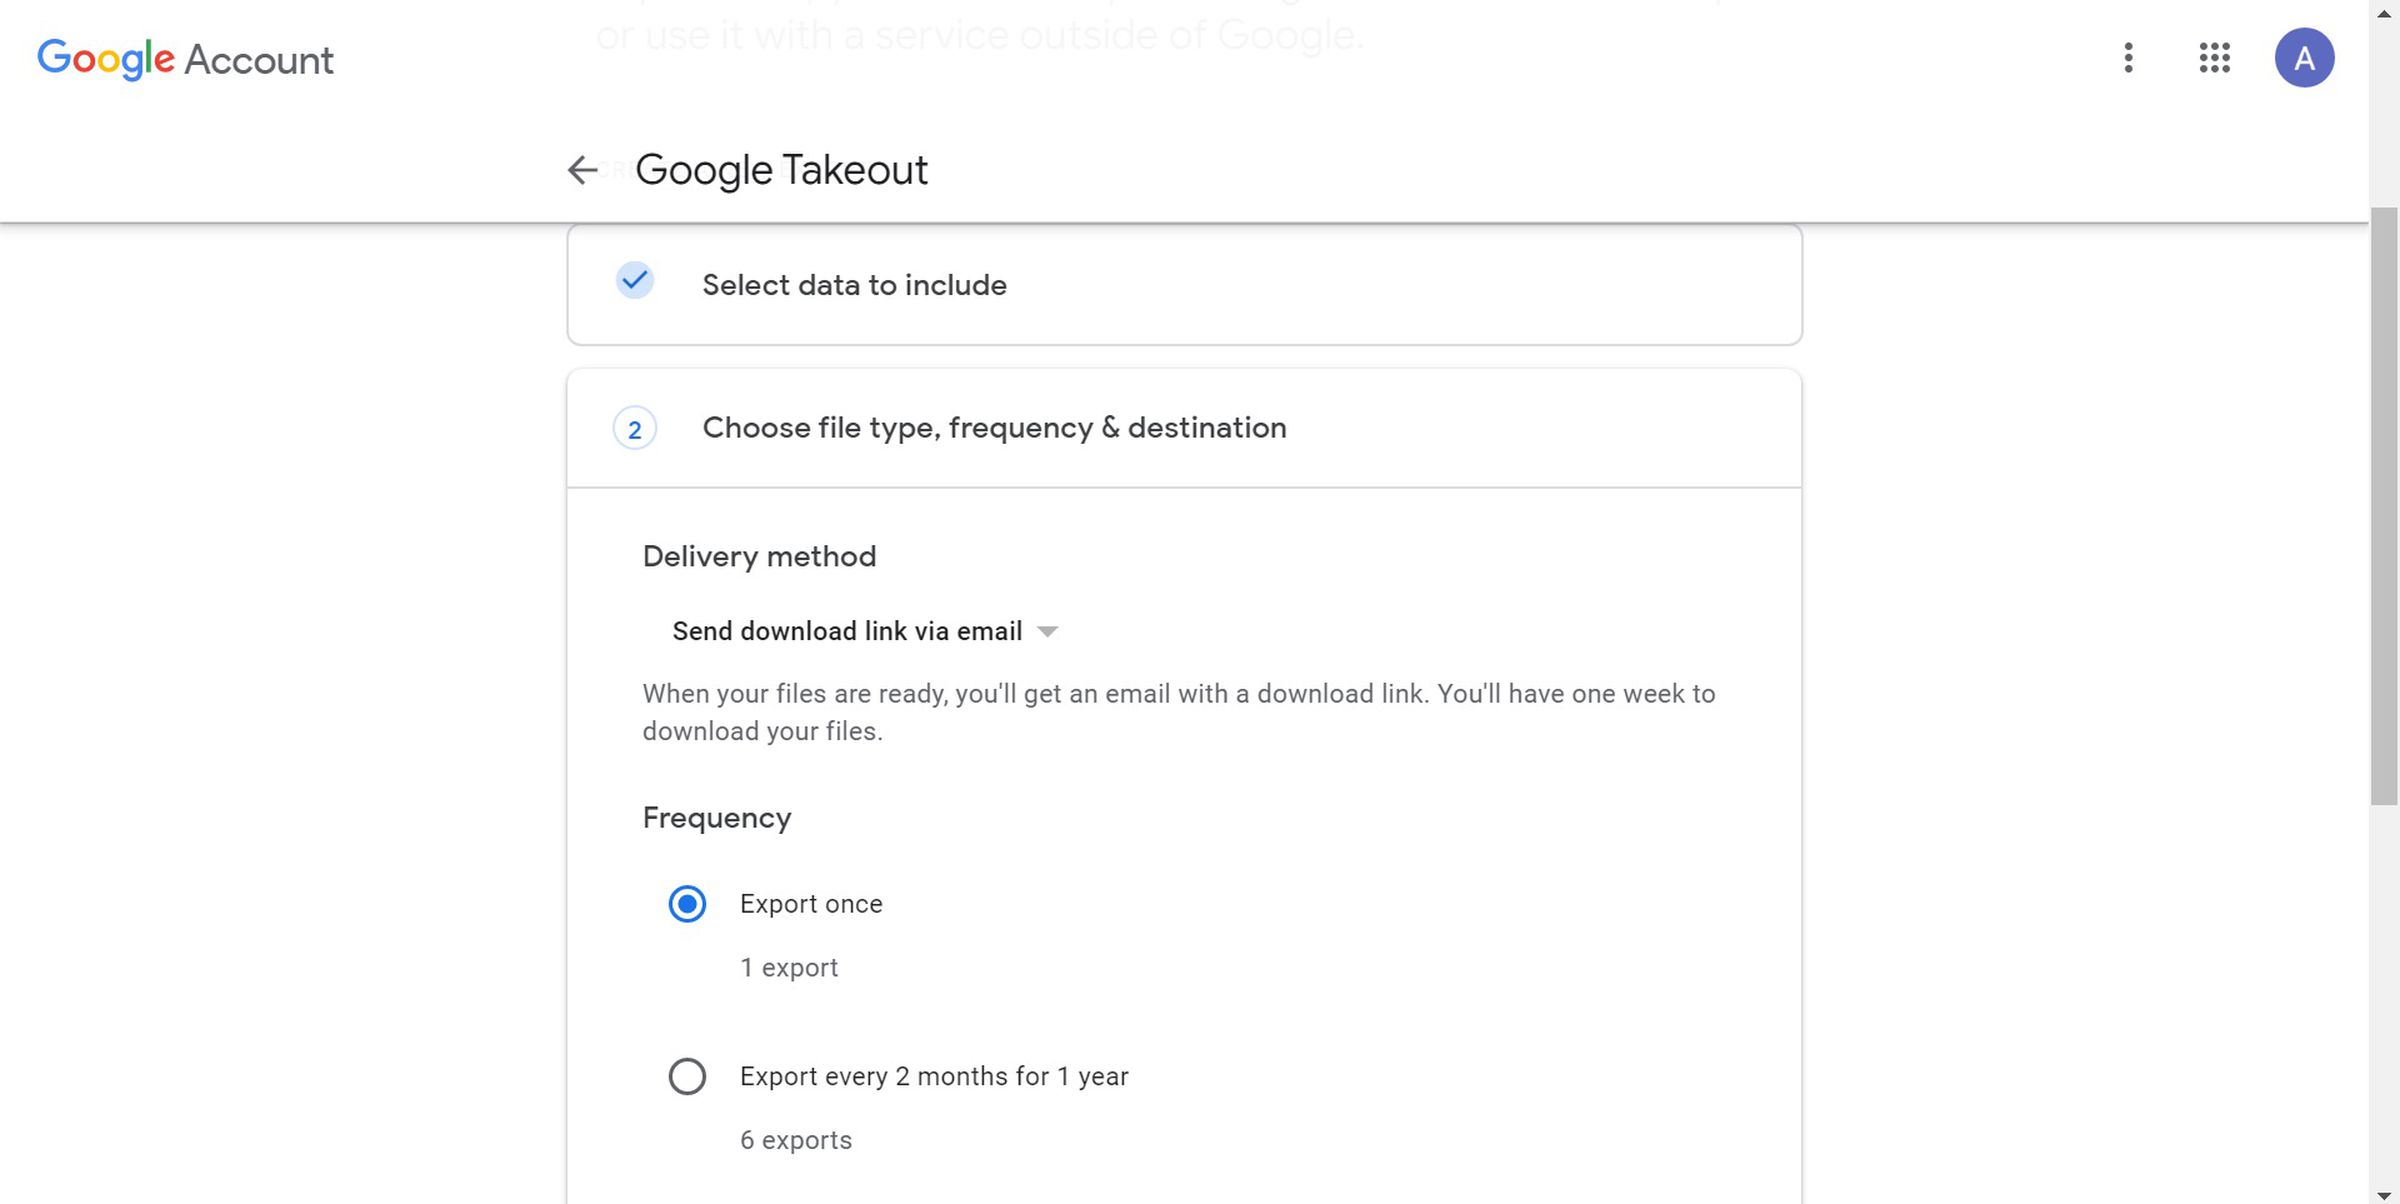 Google Takeout settings